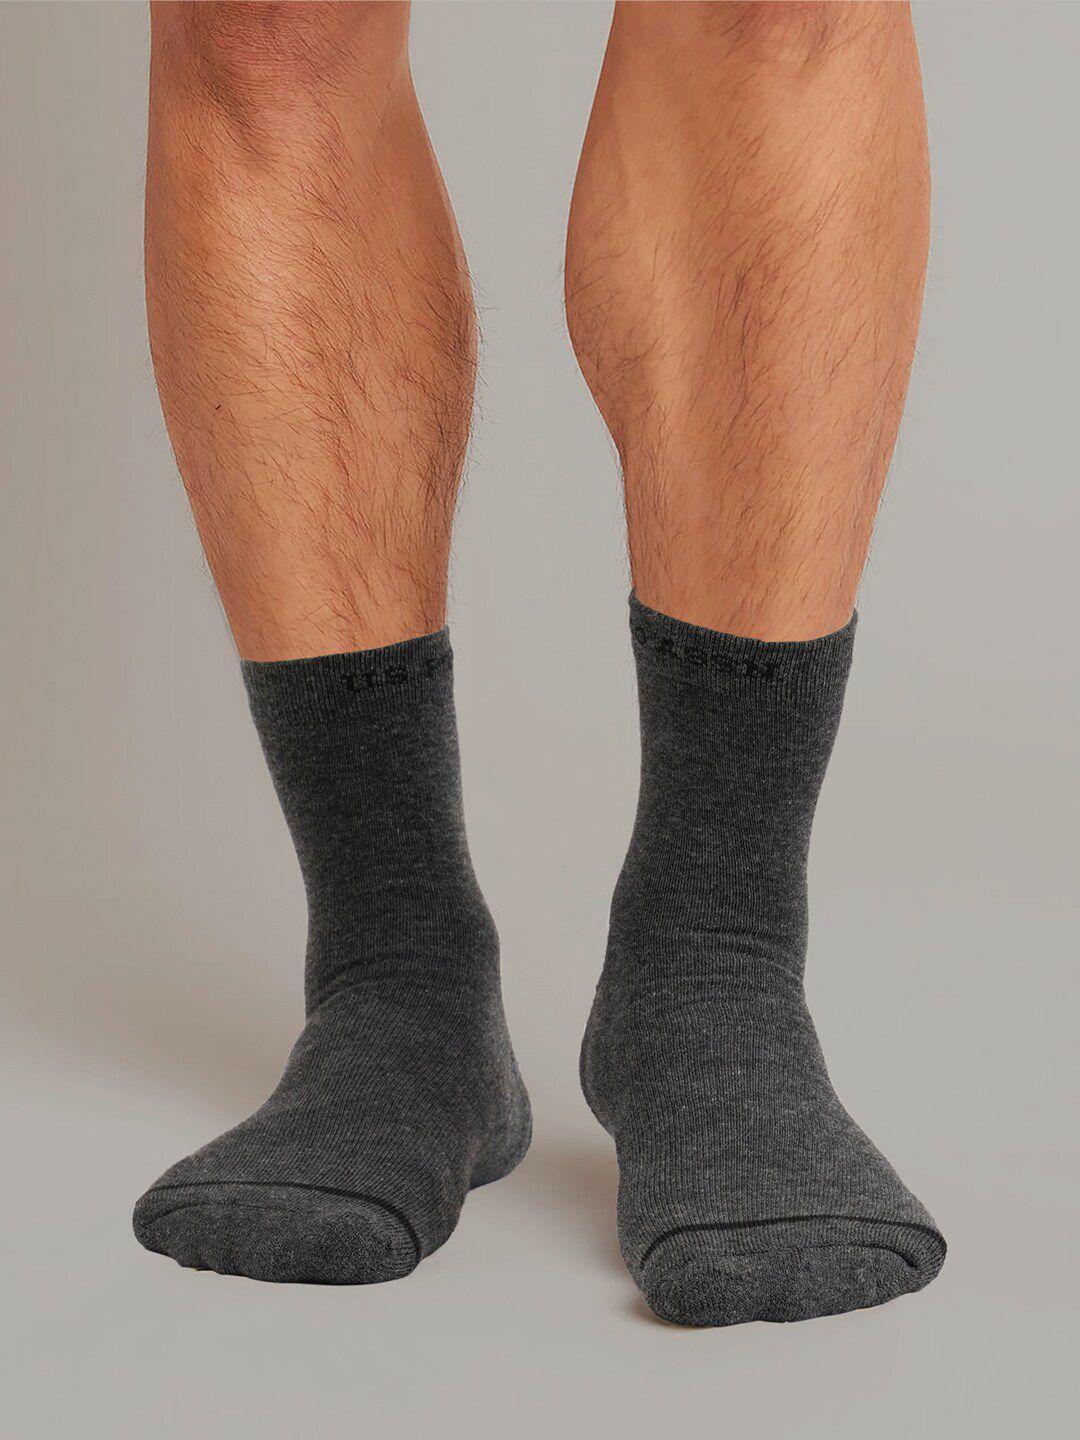 u.s. polo assn. men pack of 3 calf-length cotton socks